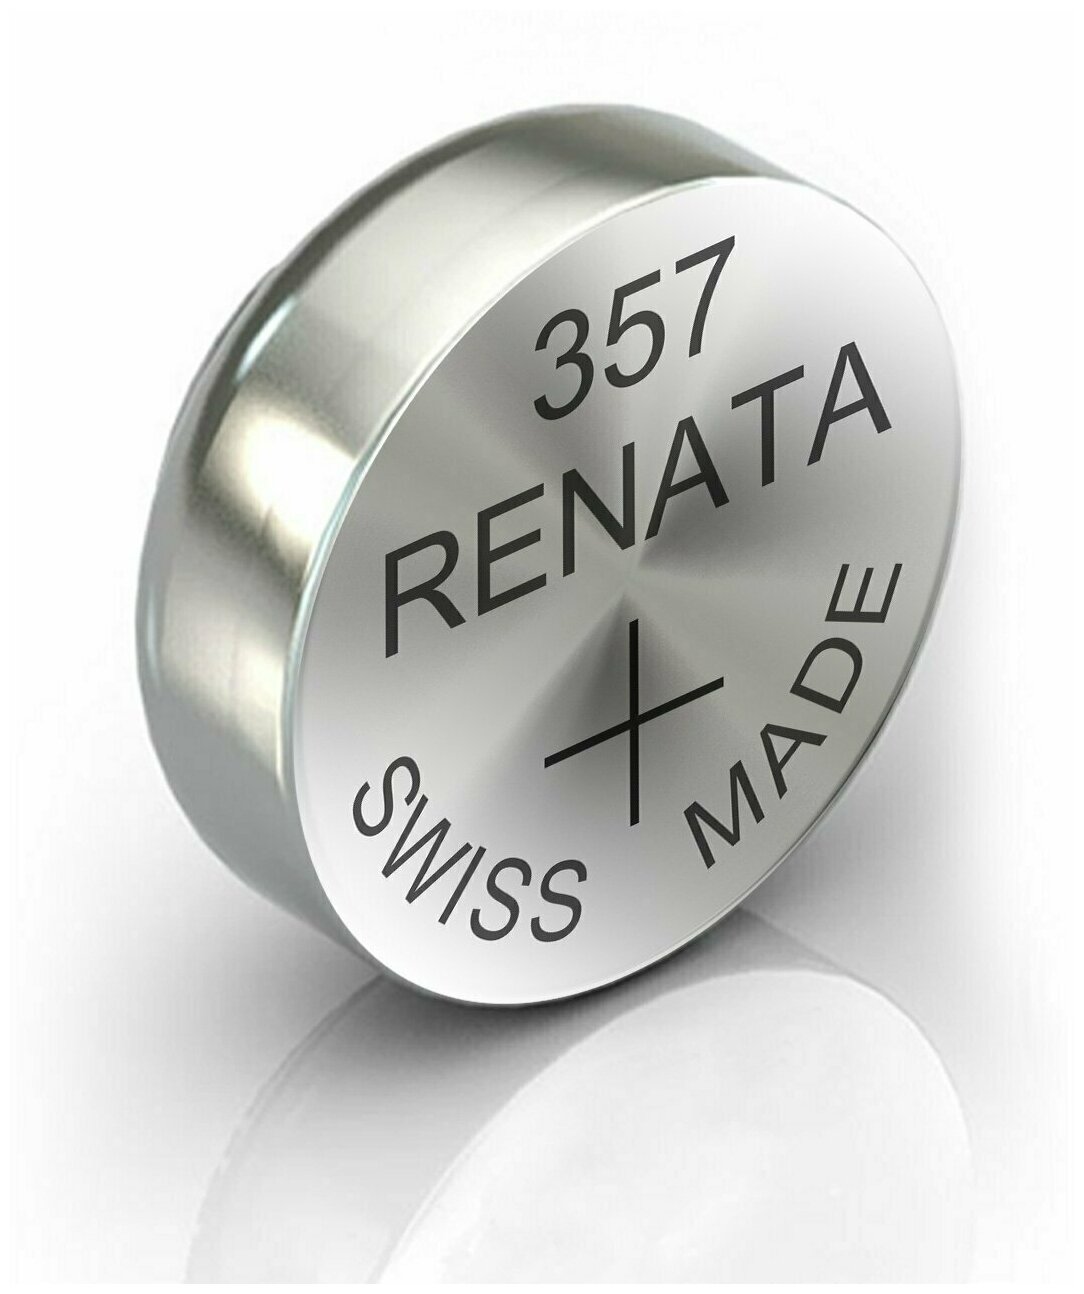 Батарейка RENATA SR 357 (44 W) AG13, 1шт